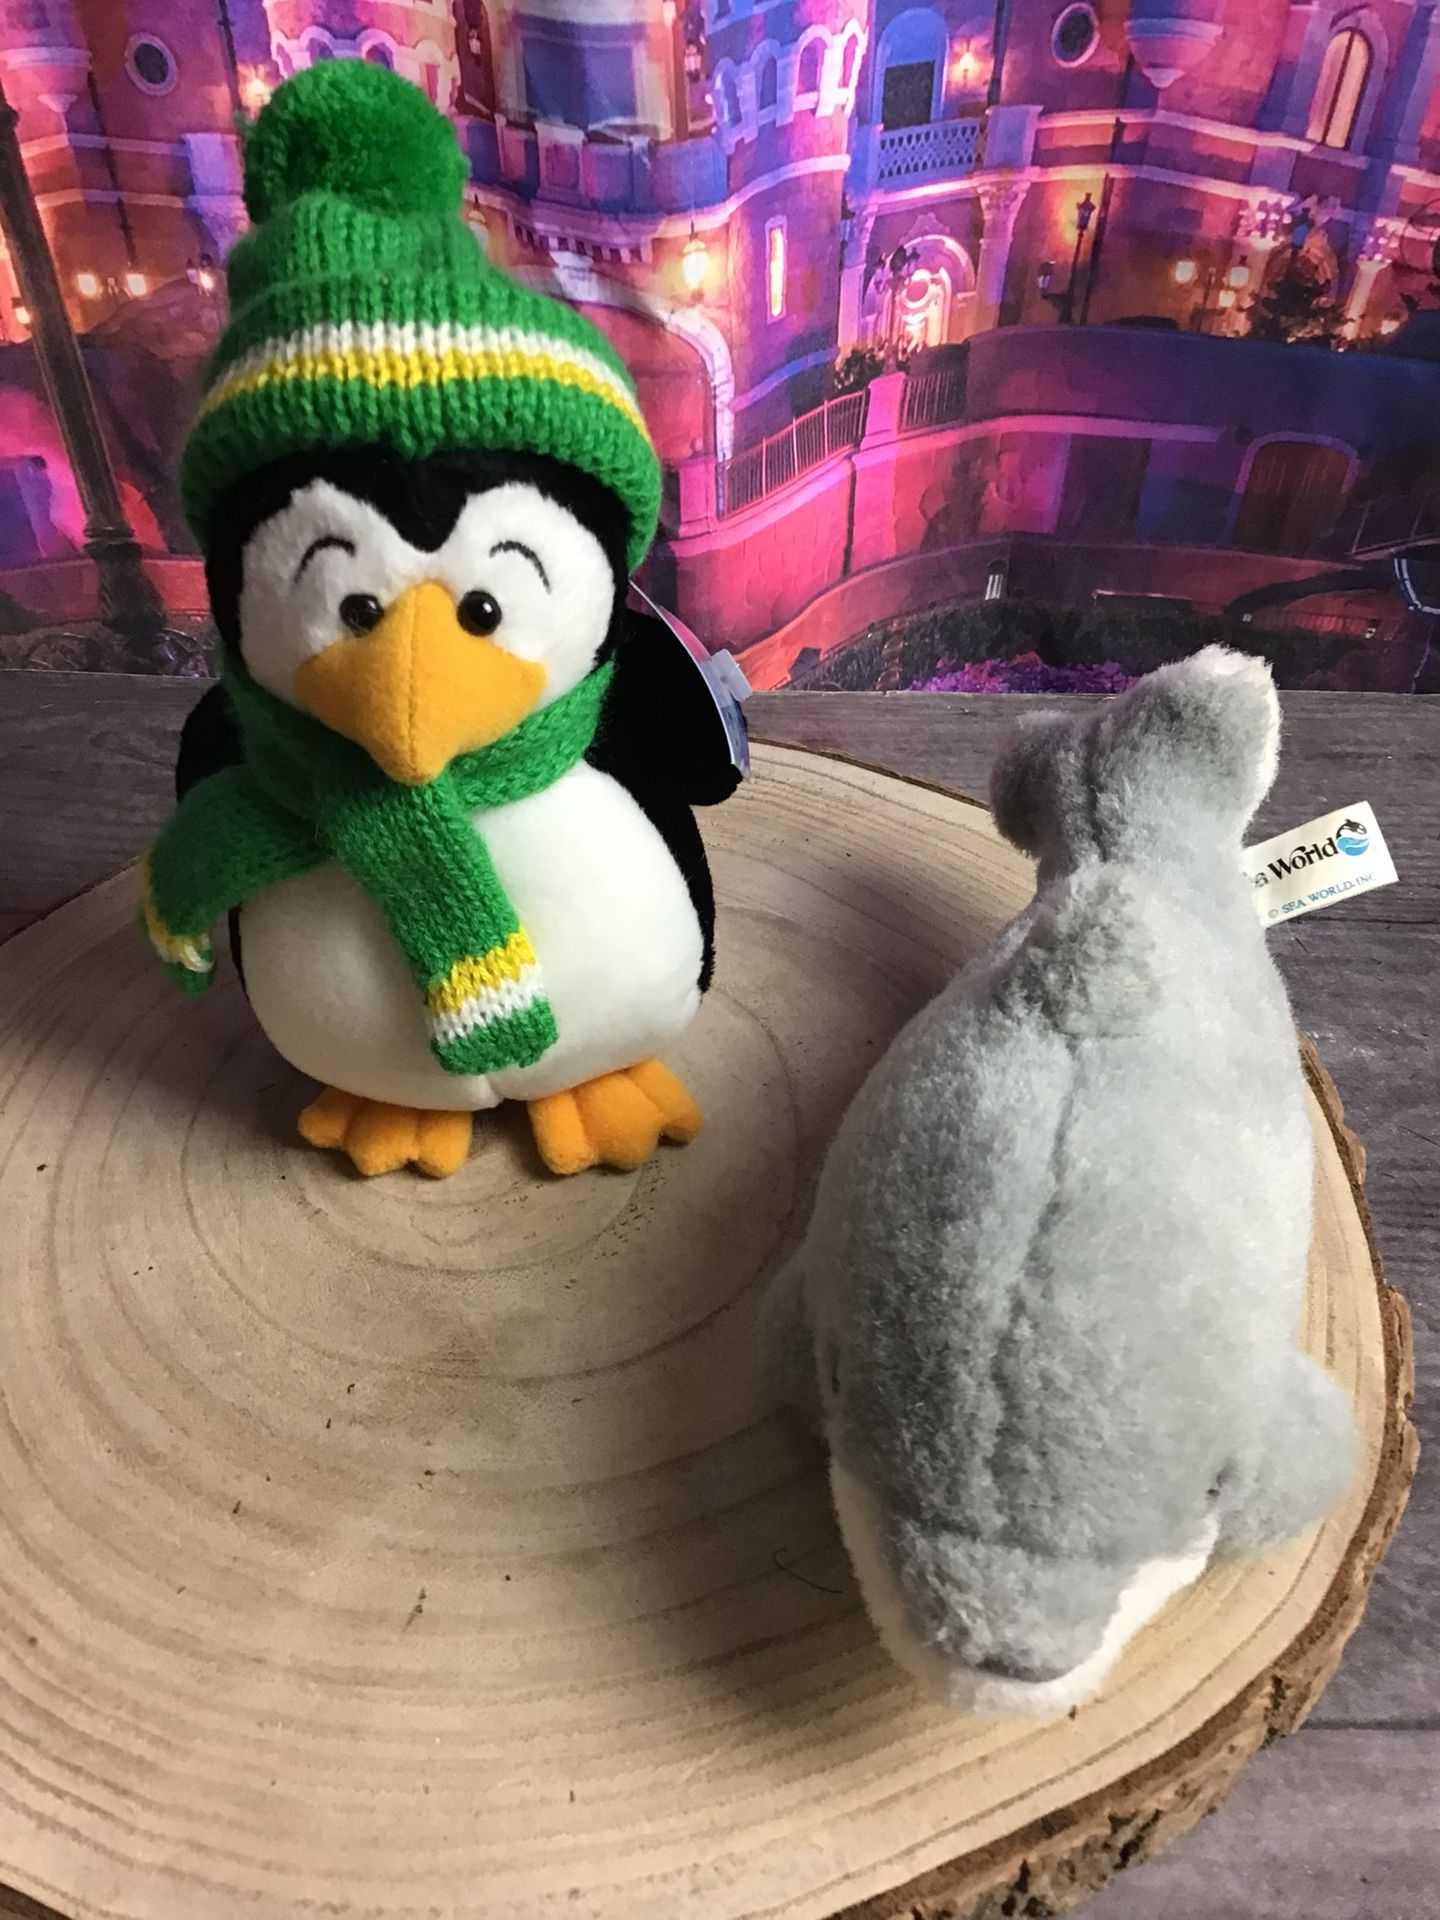 Sea World Penguin & Dolphin Plush -preowned 